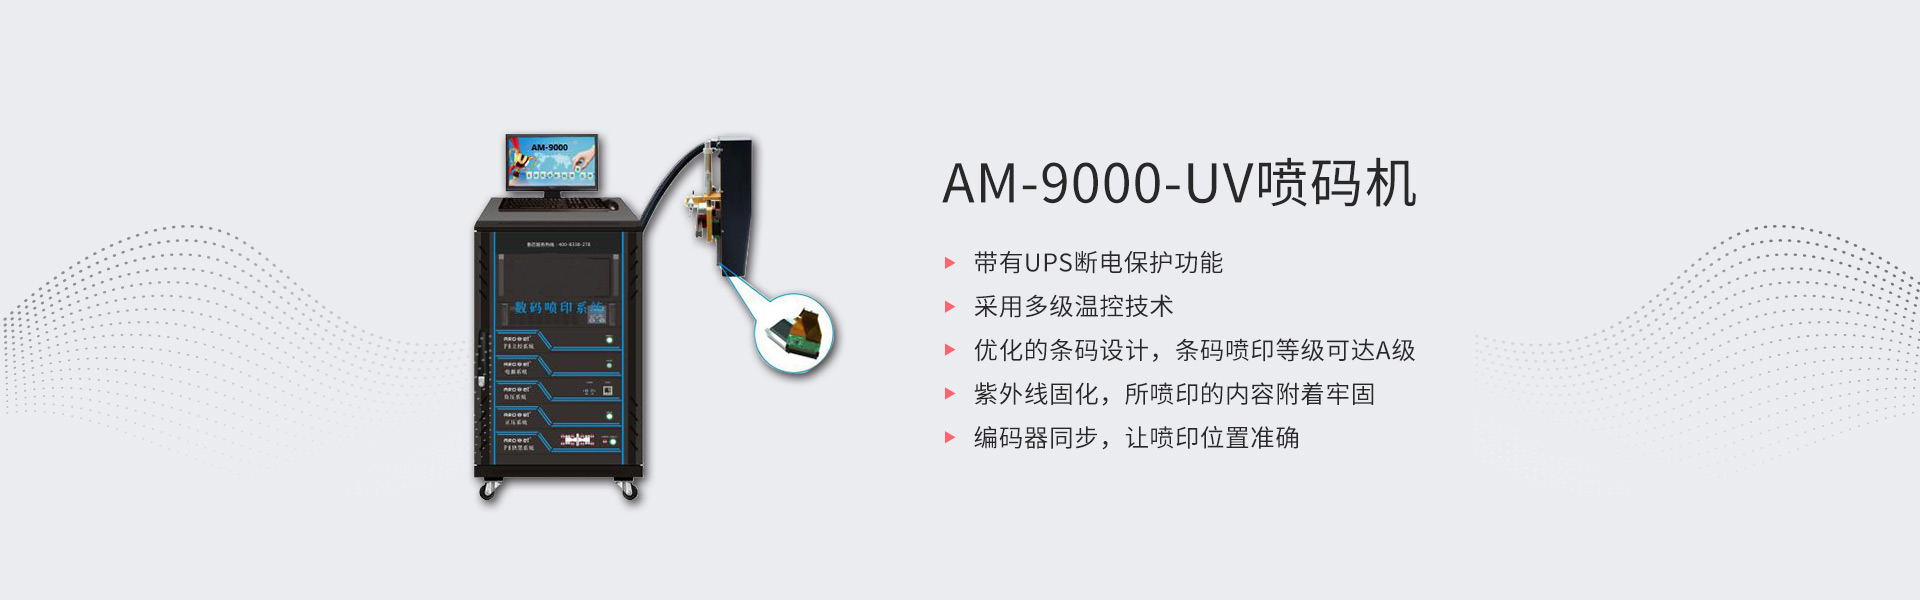 AM-9000-UV喷码机(图1)